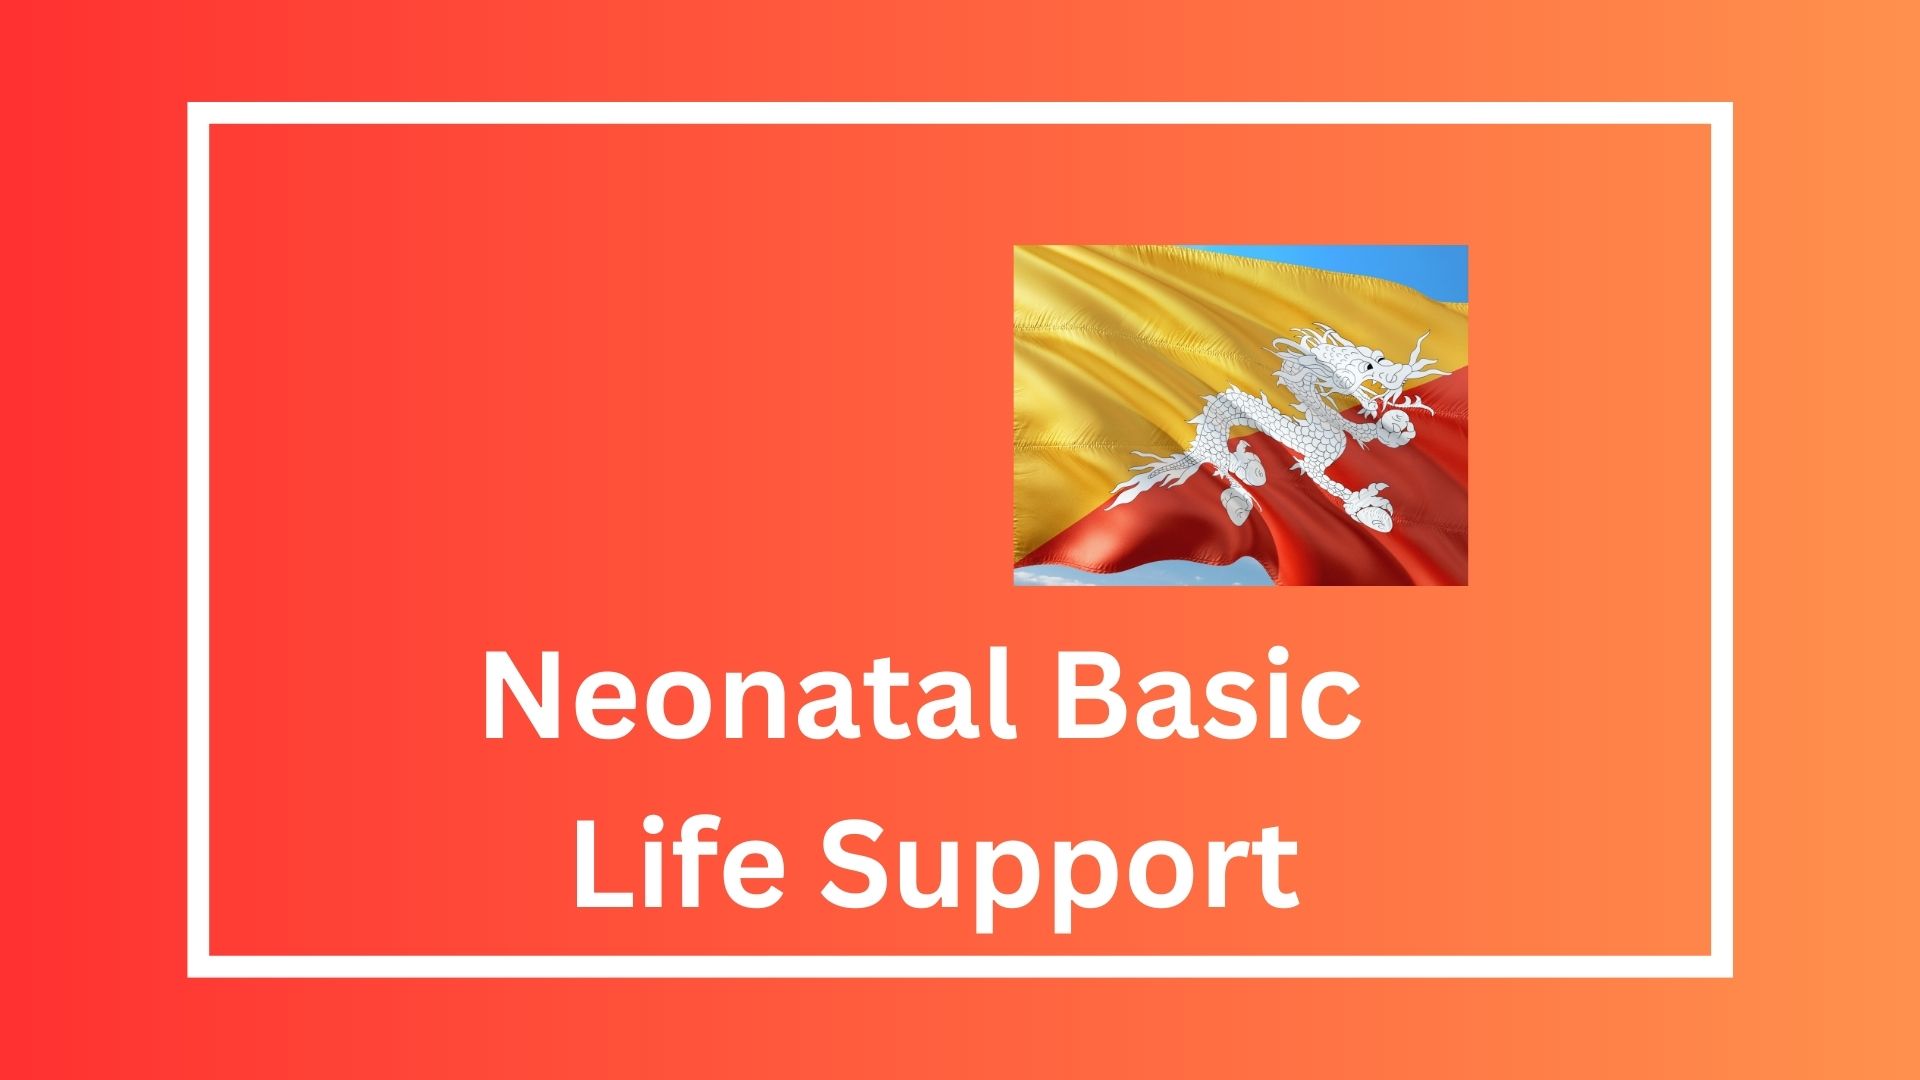 Neonatal Basic Life Support